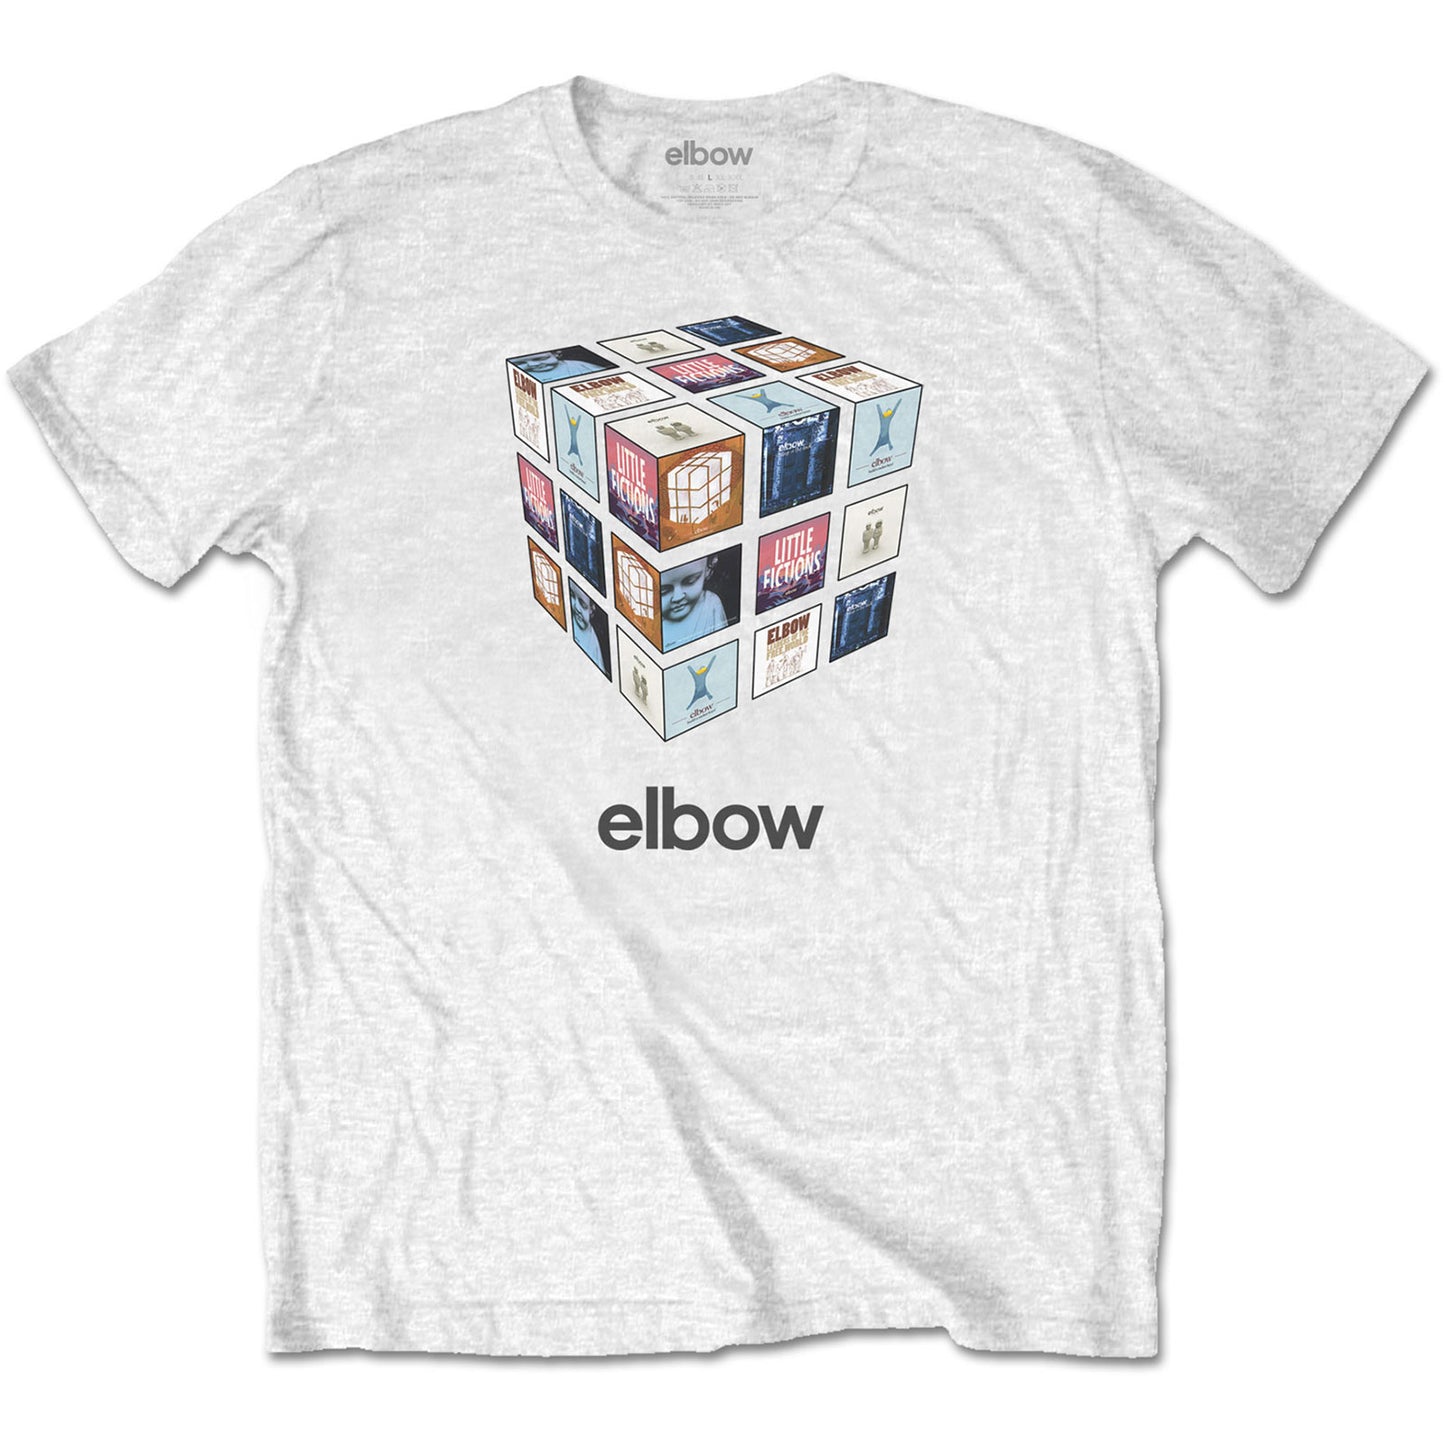 Elbow T-Shirt: Best of